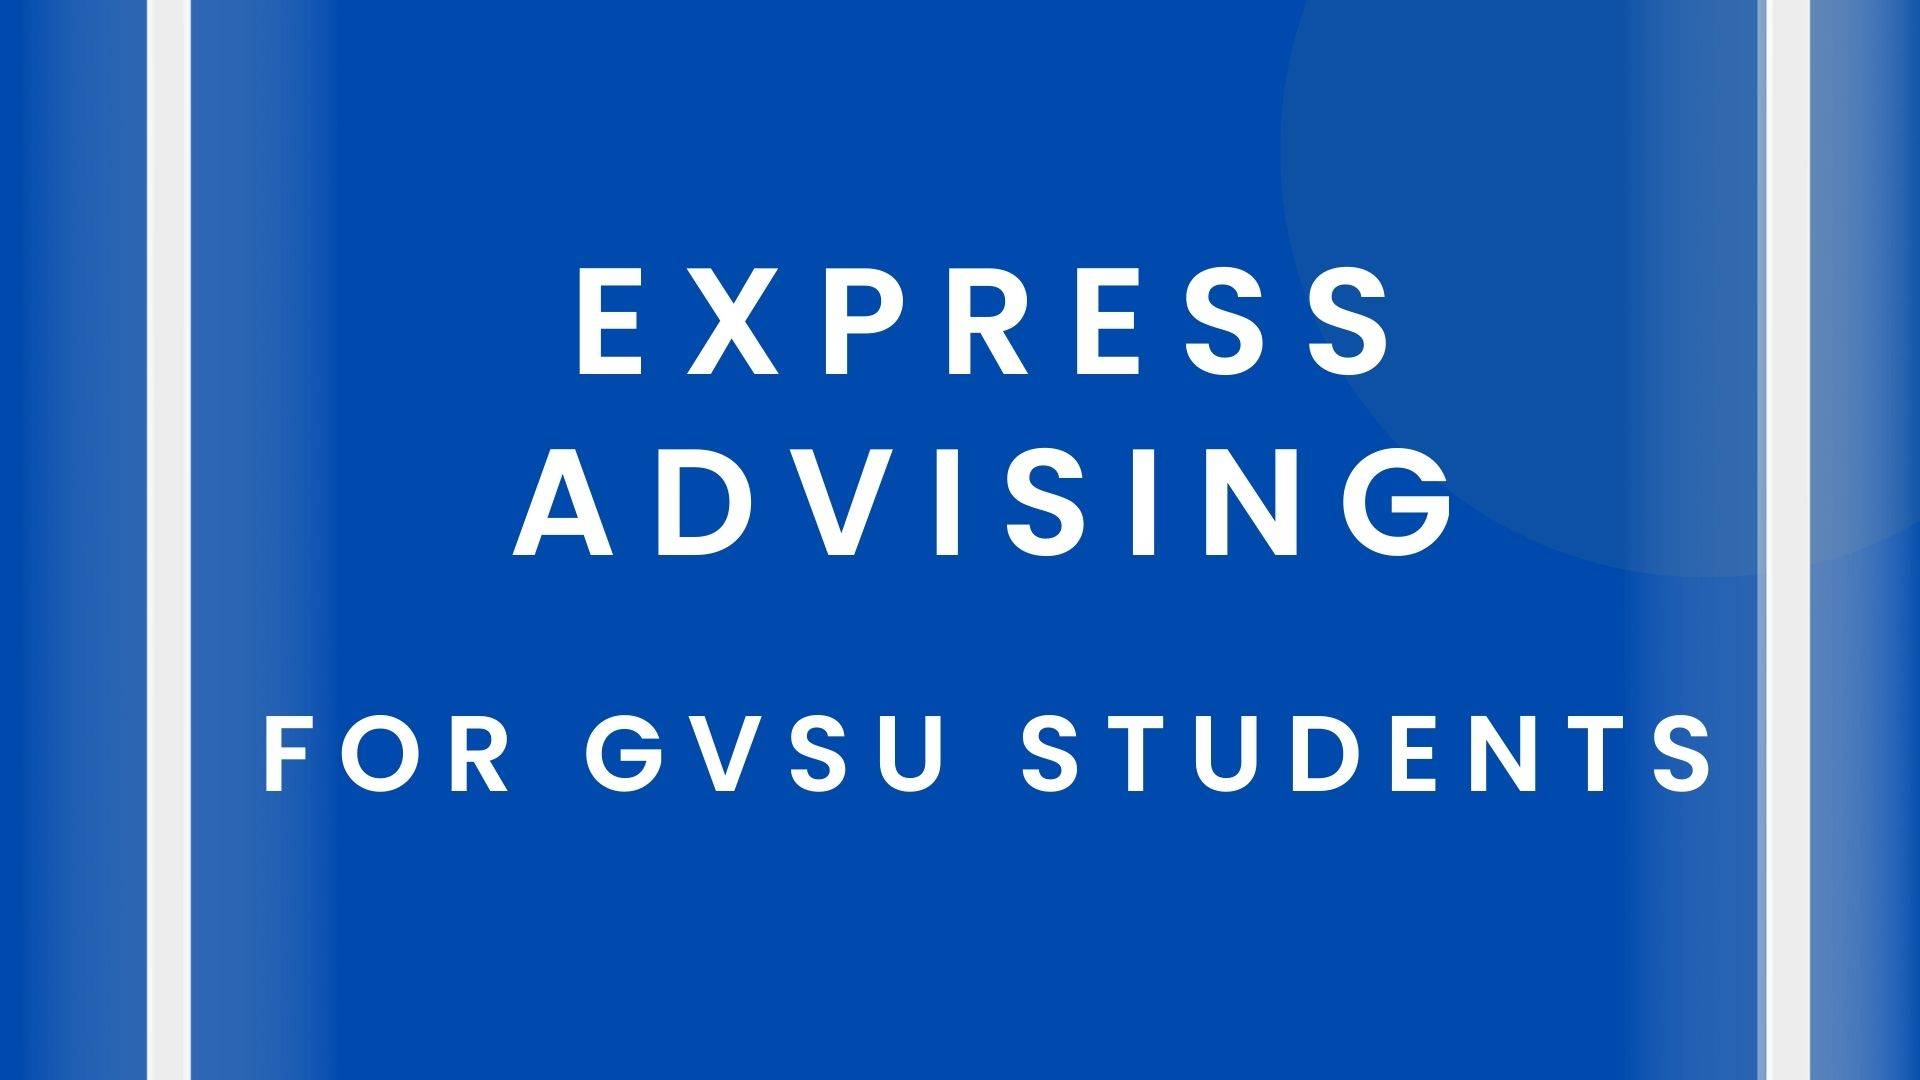 Express Advising for GVSU Students